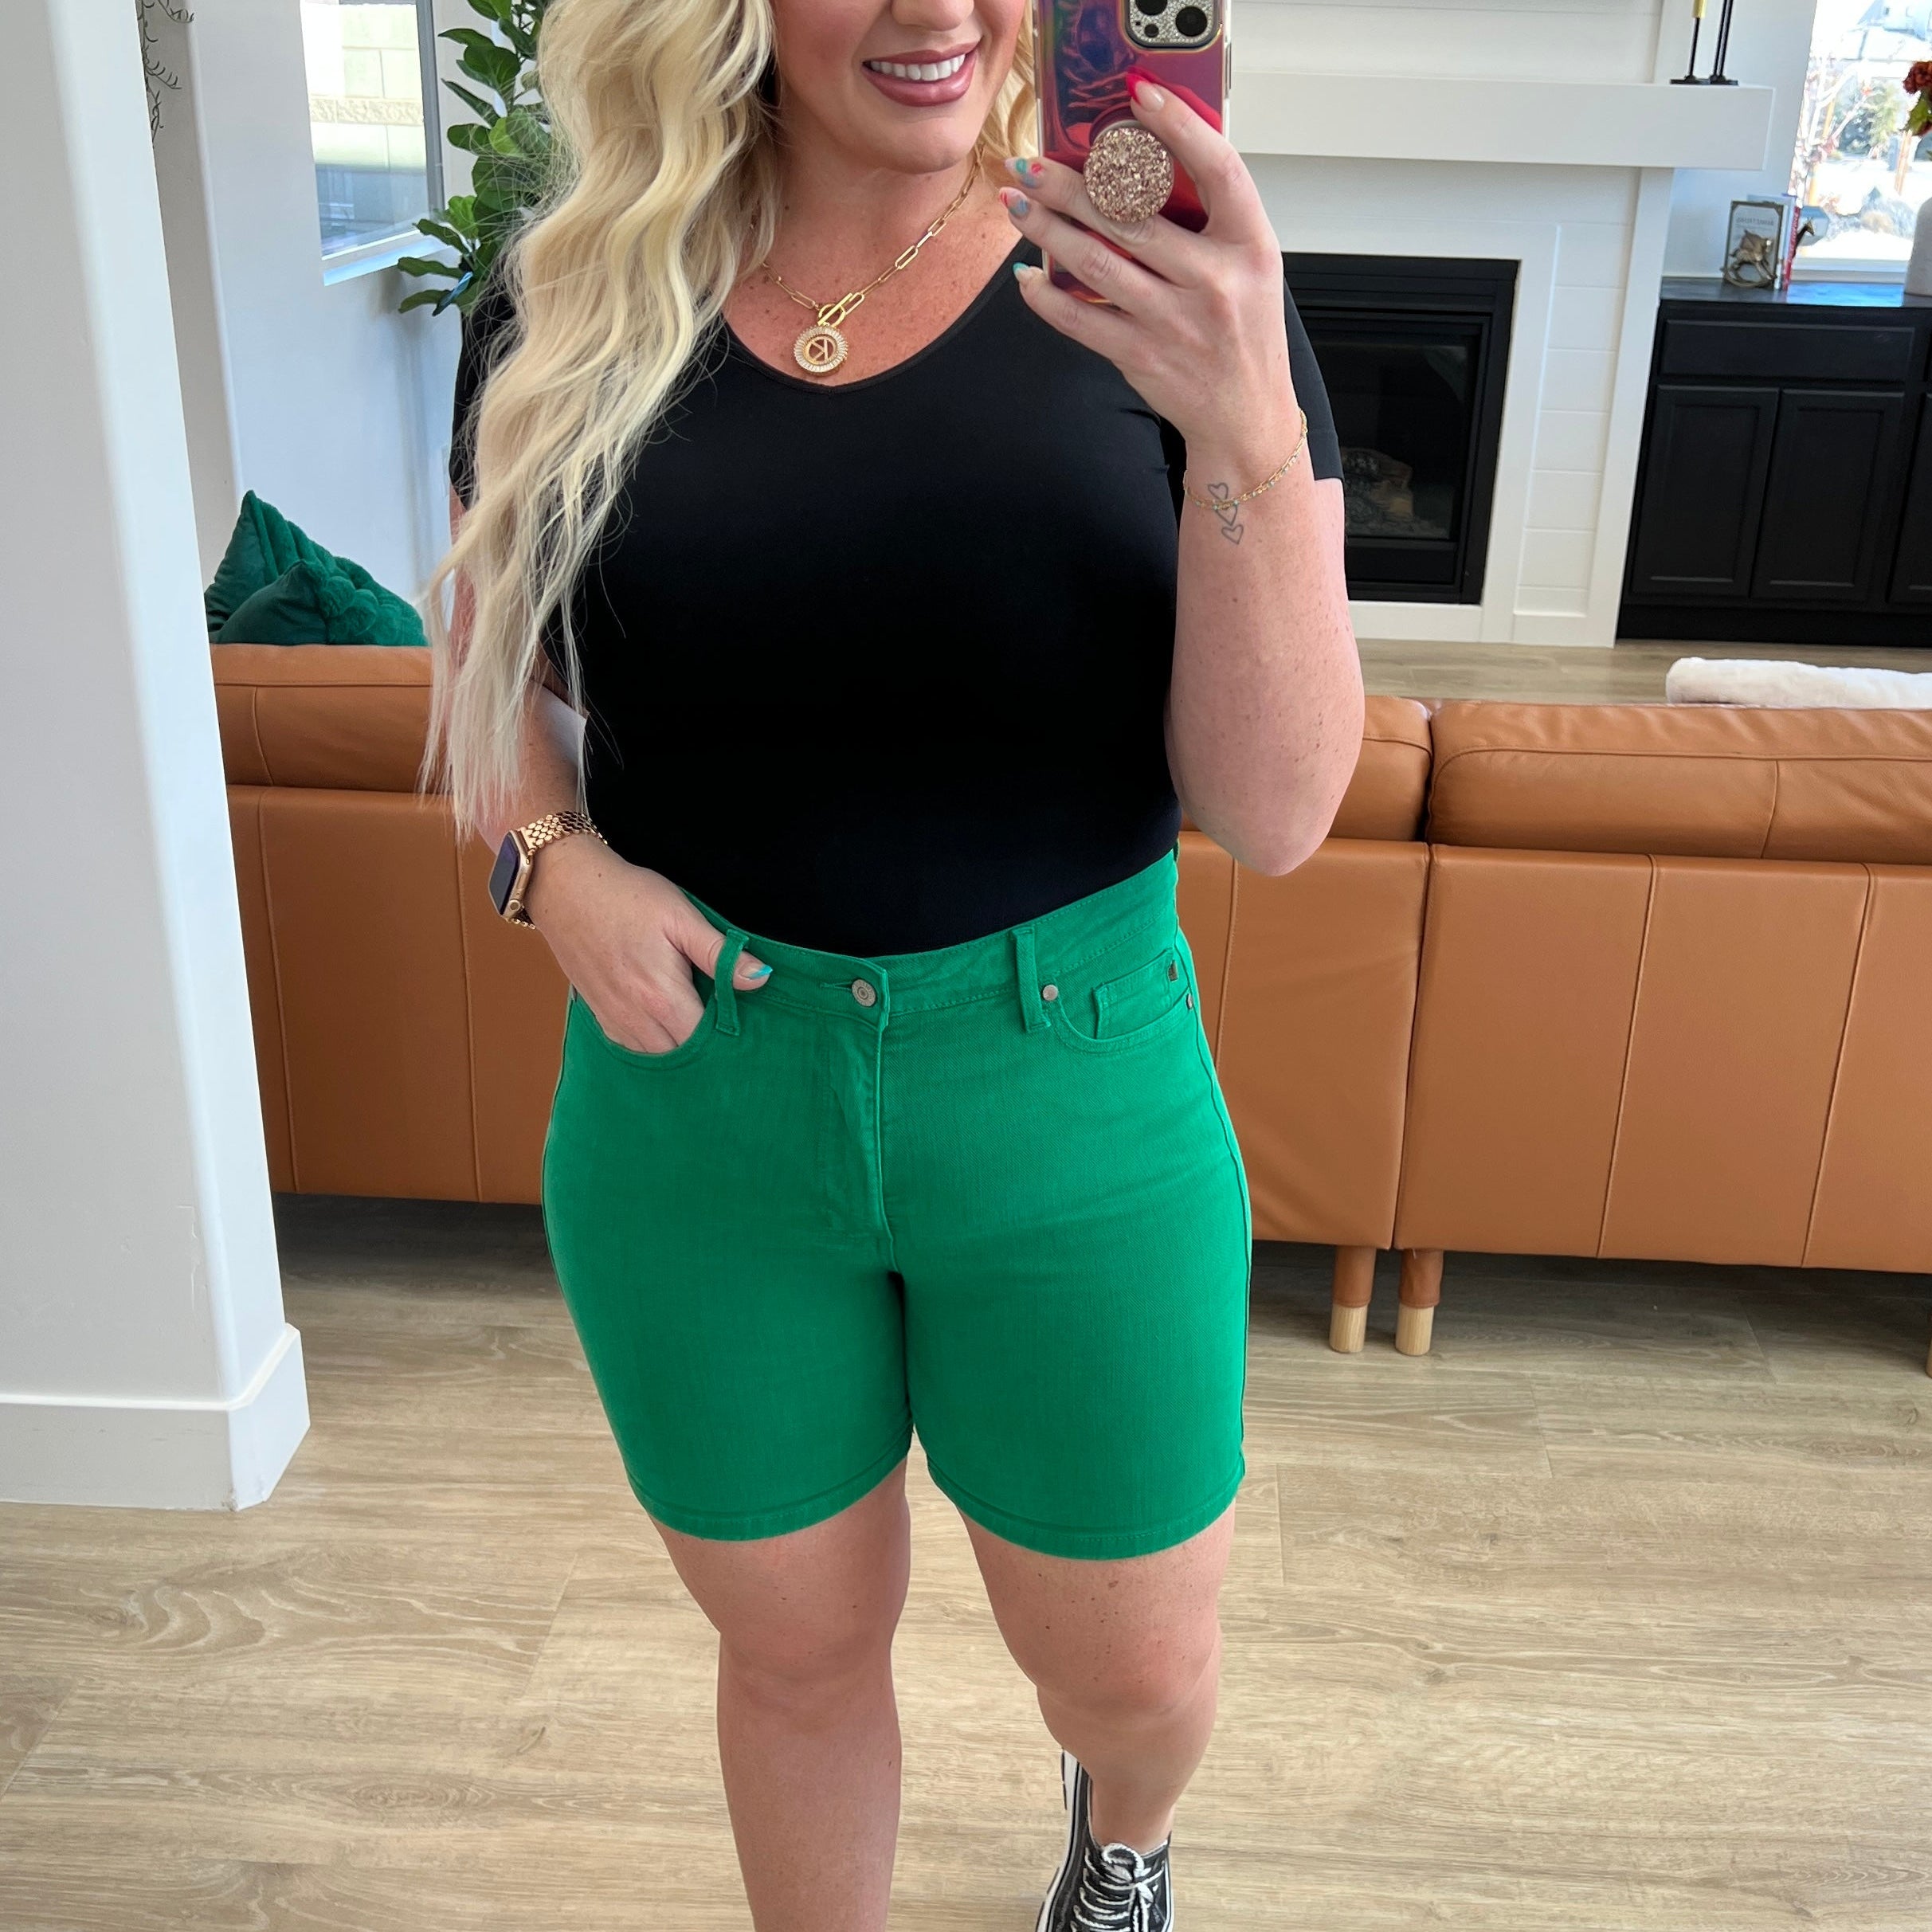 Jenna High Rise Control Top Cuffed Shorts in Green